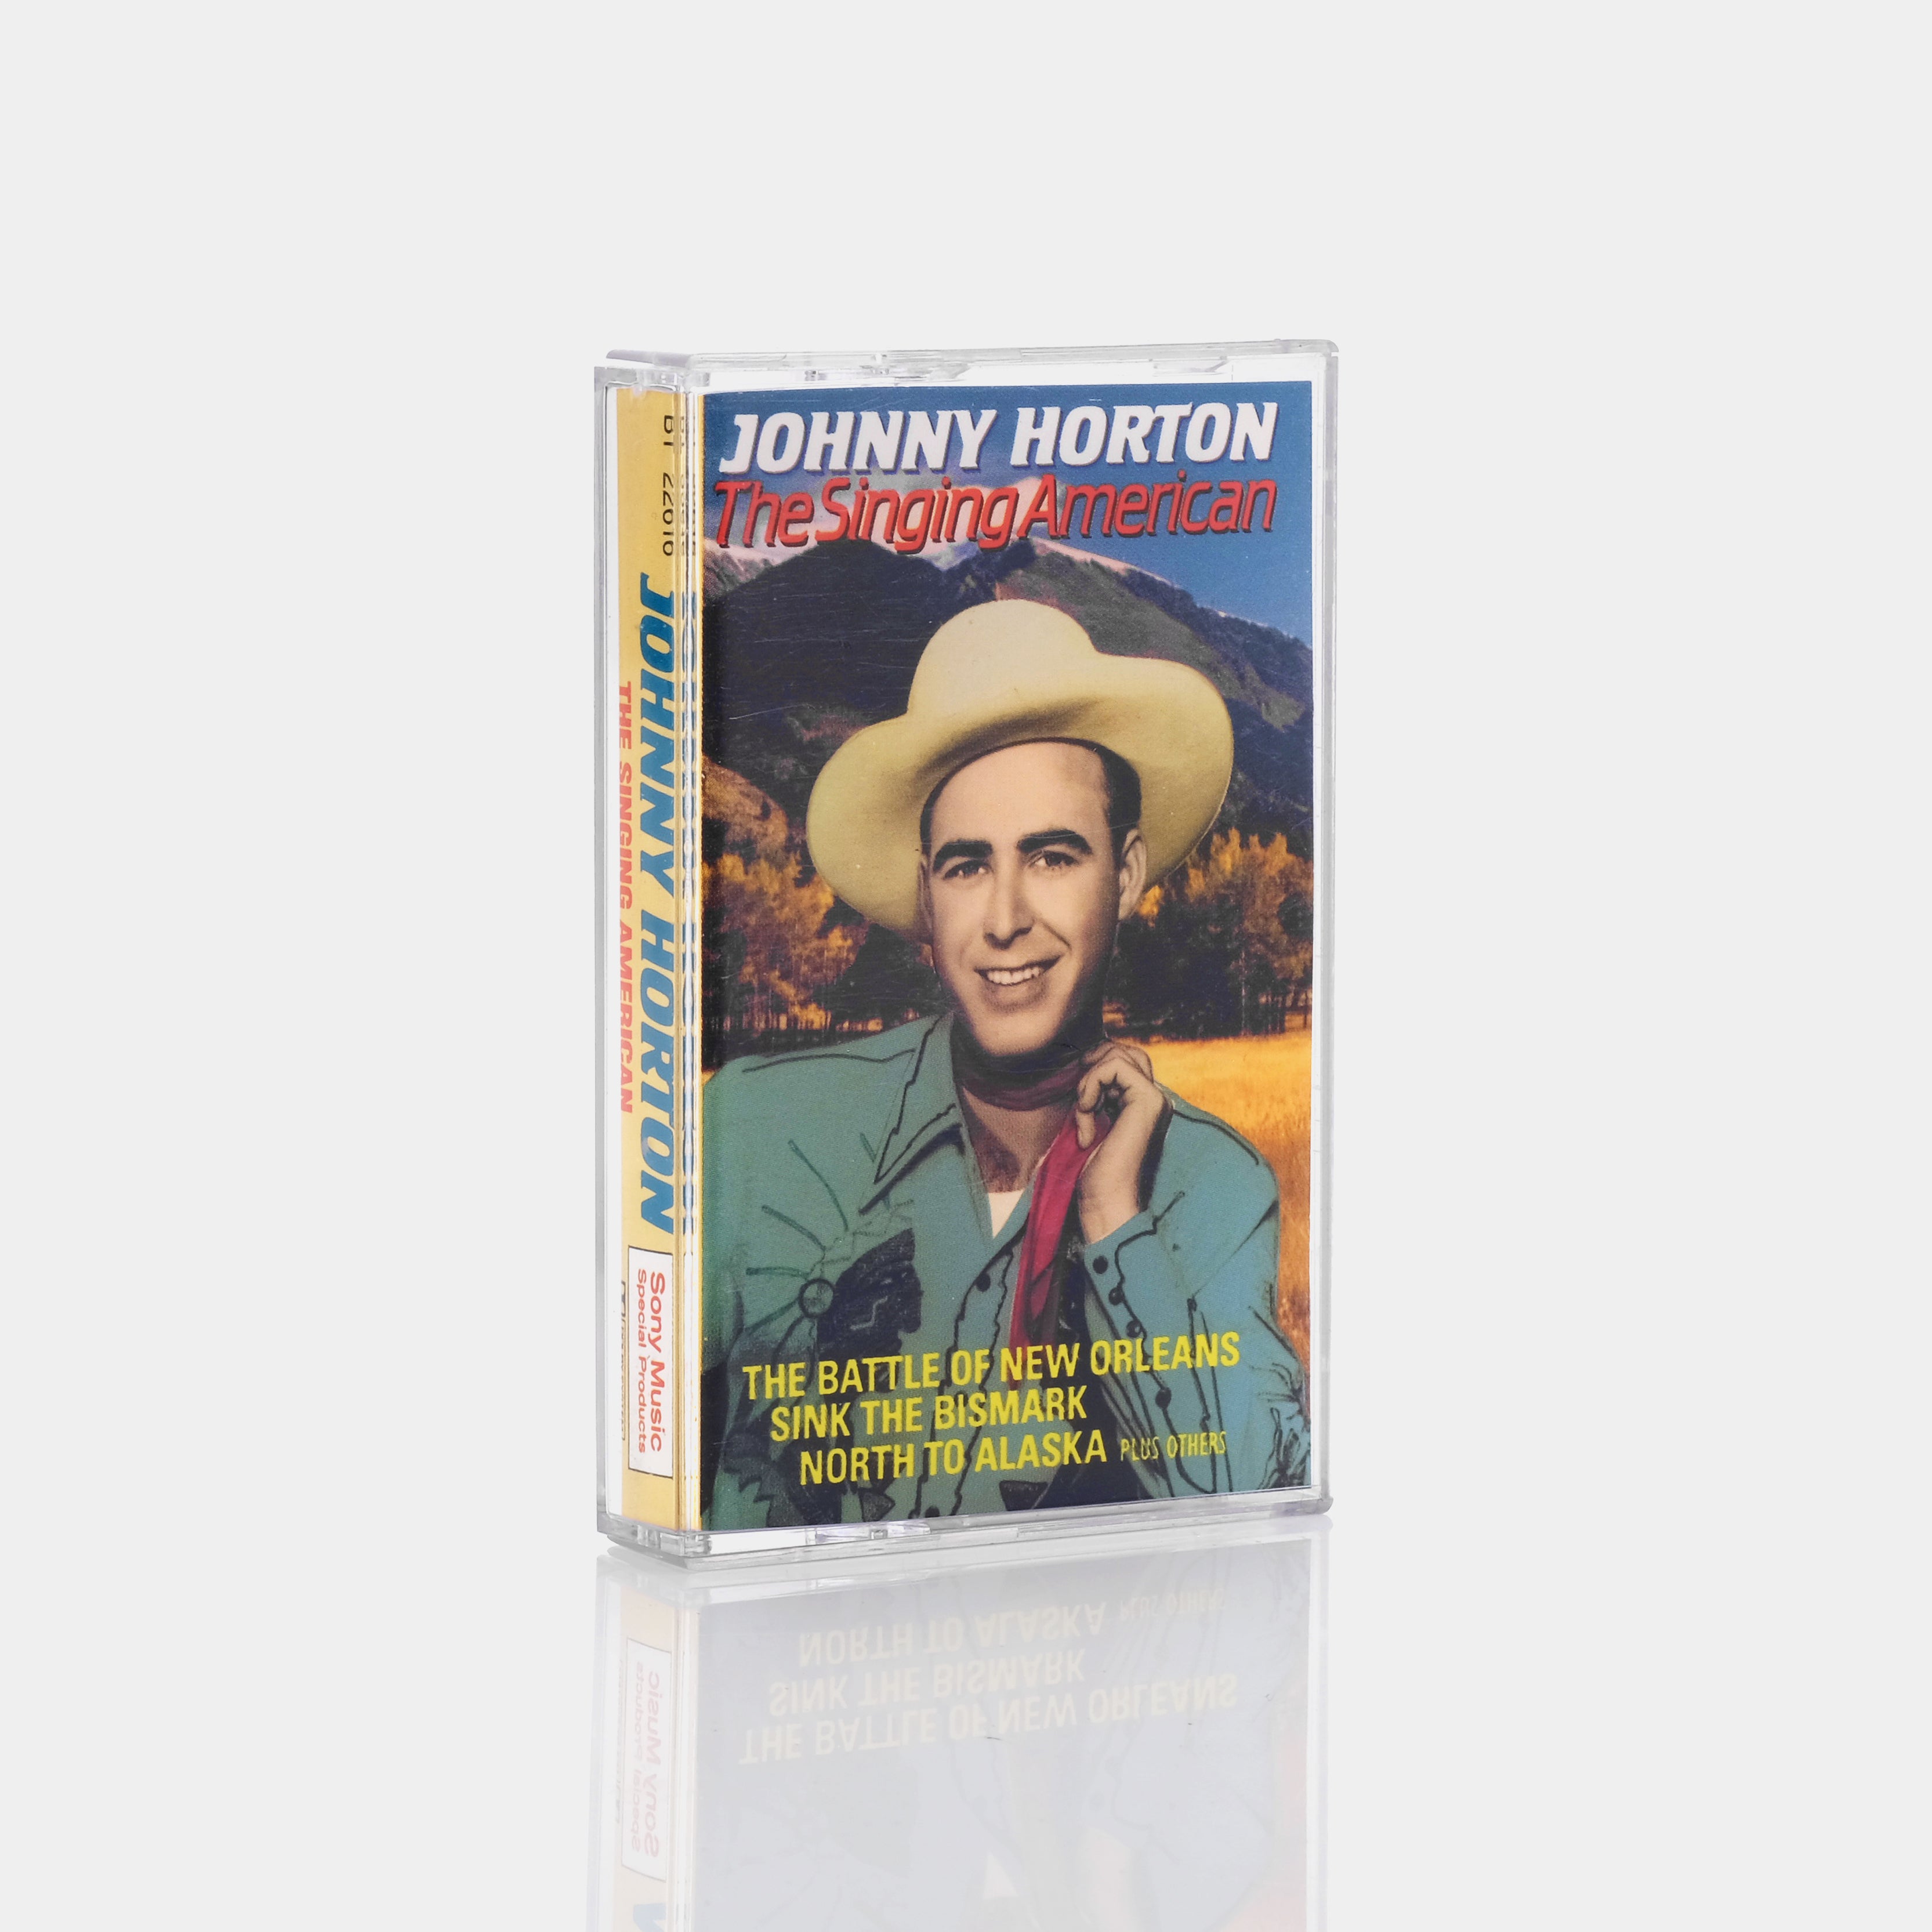 Johnny Horton - The Singing American Cassette Tape